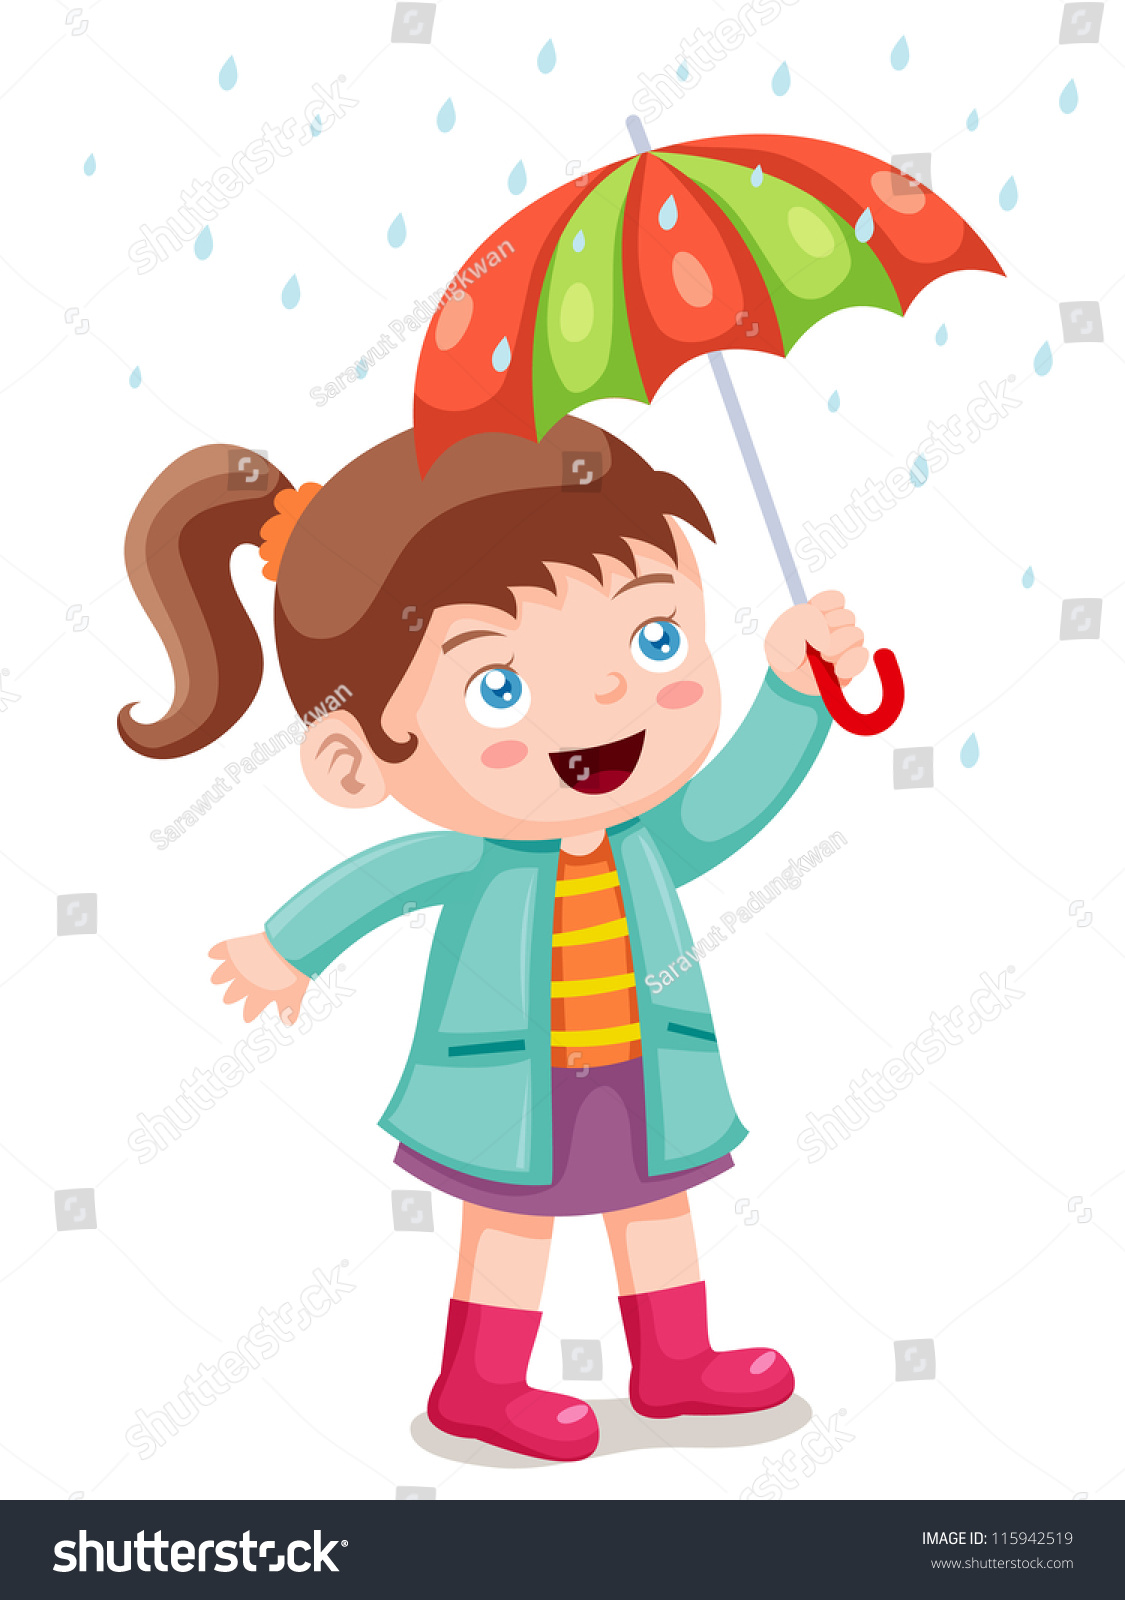 Illustration Of Girl In Raining With Umbrella - 115942519 : Shutterstock